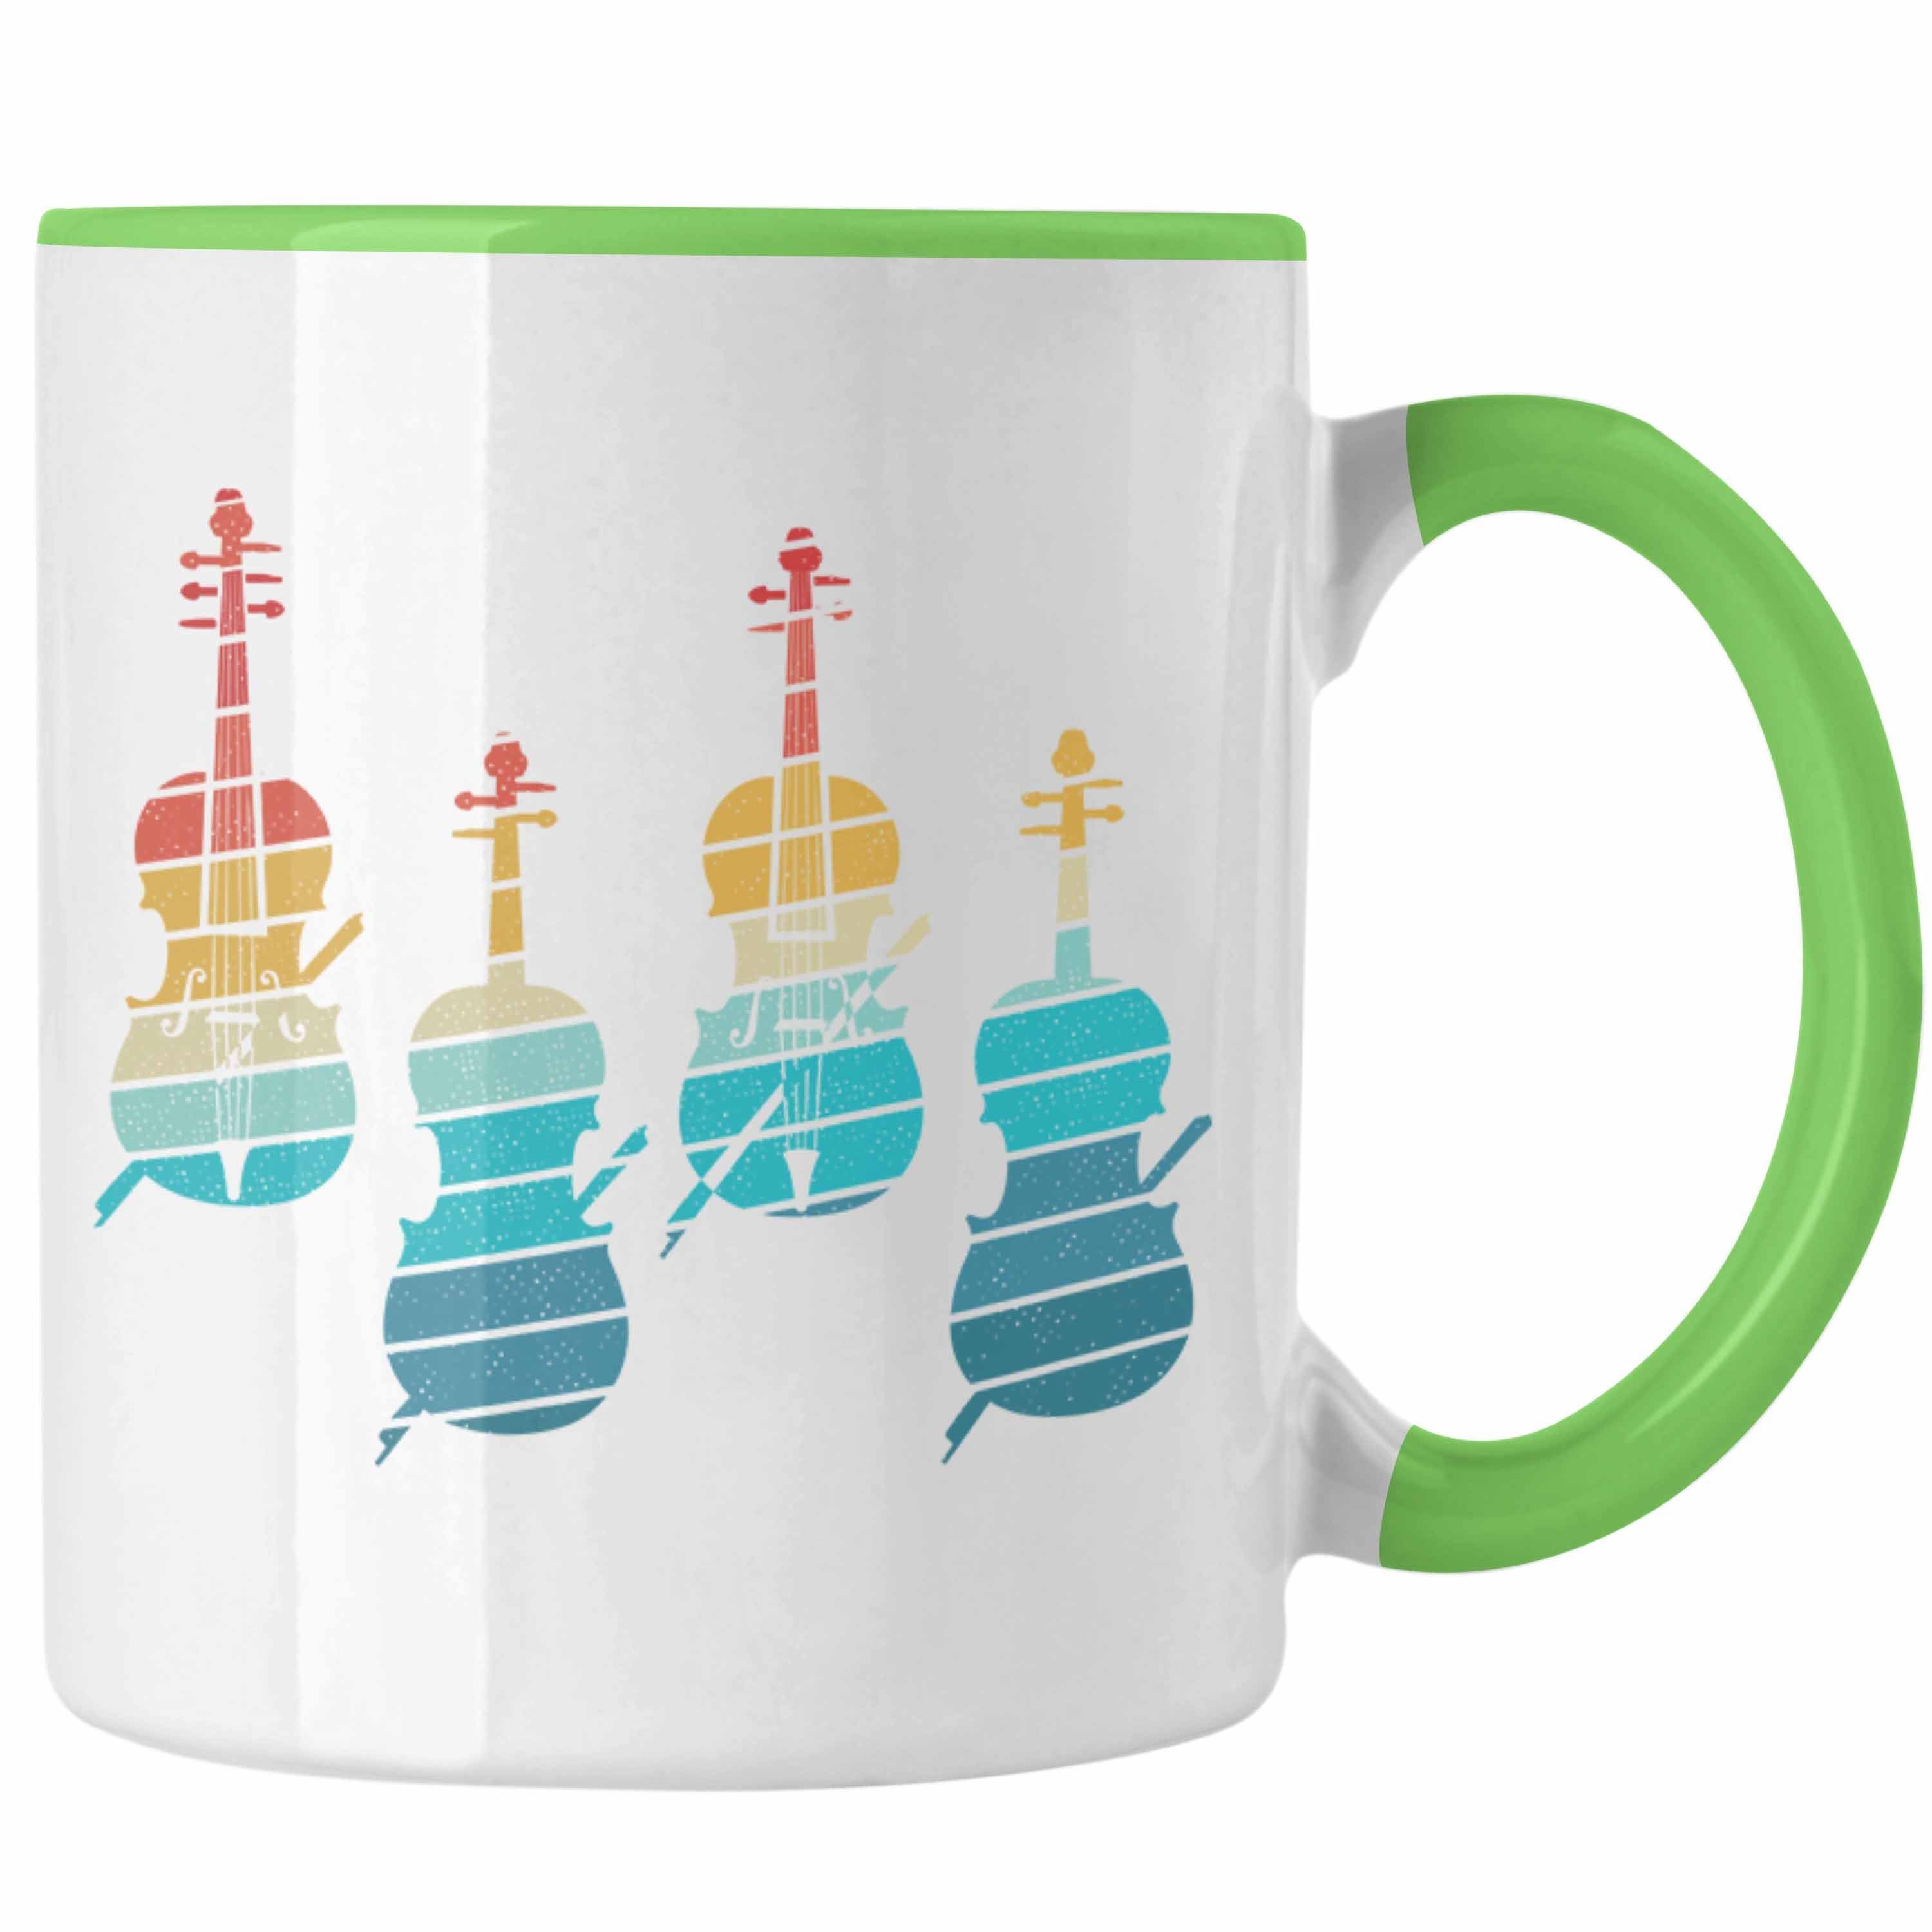 Trendation Kaffee-Becher Tasse Graf Geigenspielerin Geigen Grün Tasse Geigenspieler Geschenk